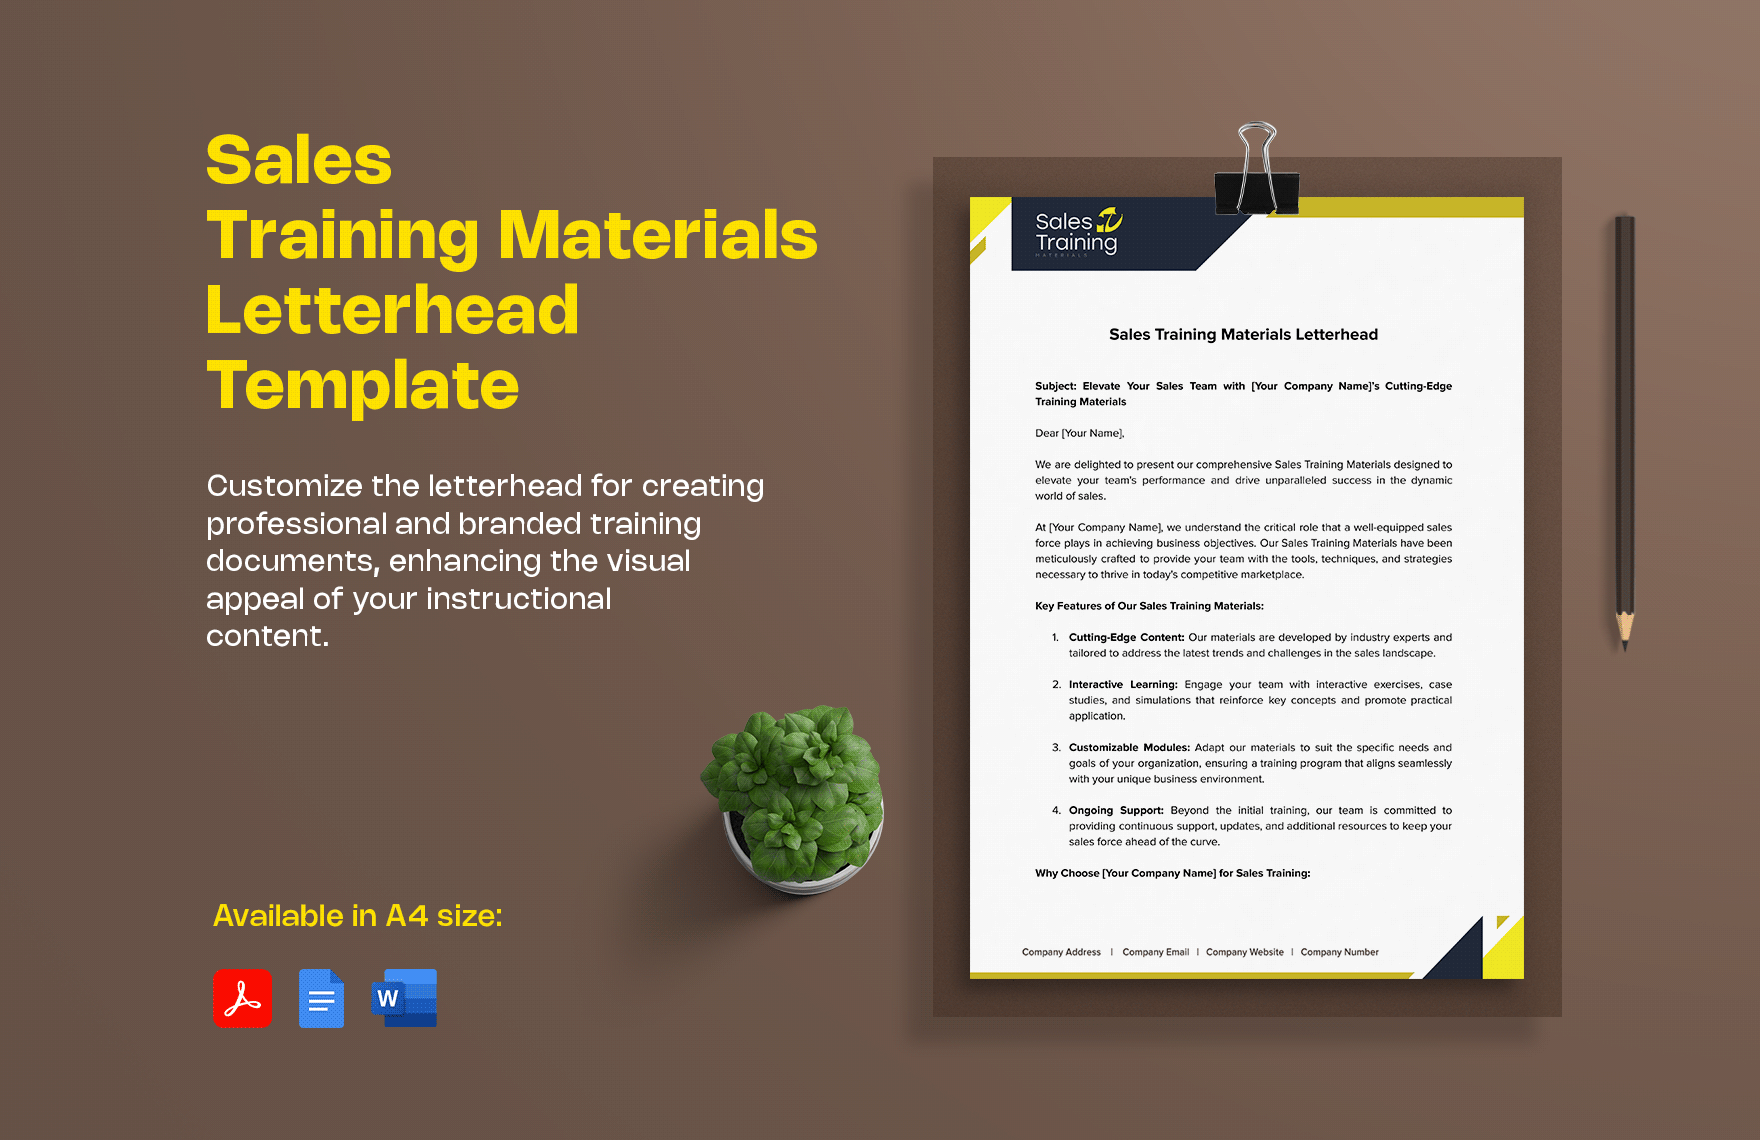 Sales Training Materials Letterhead Template